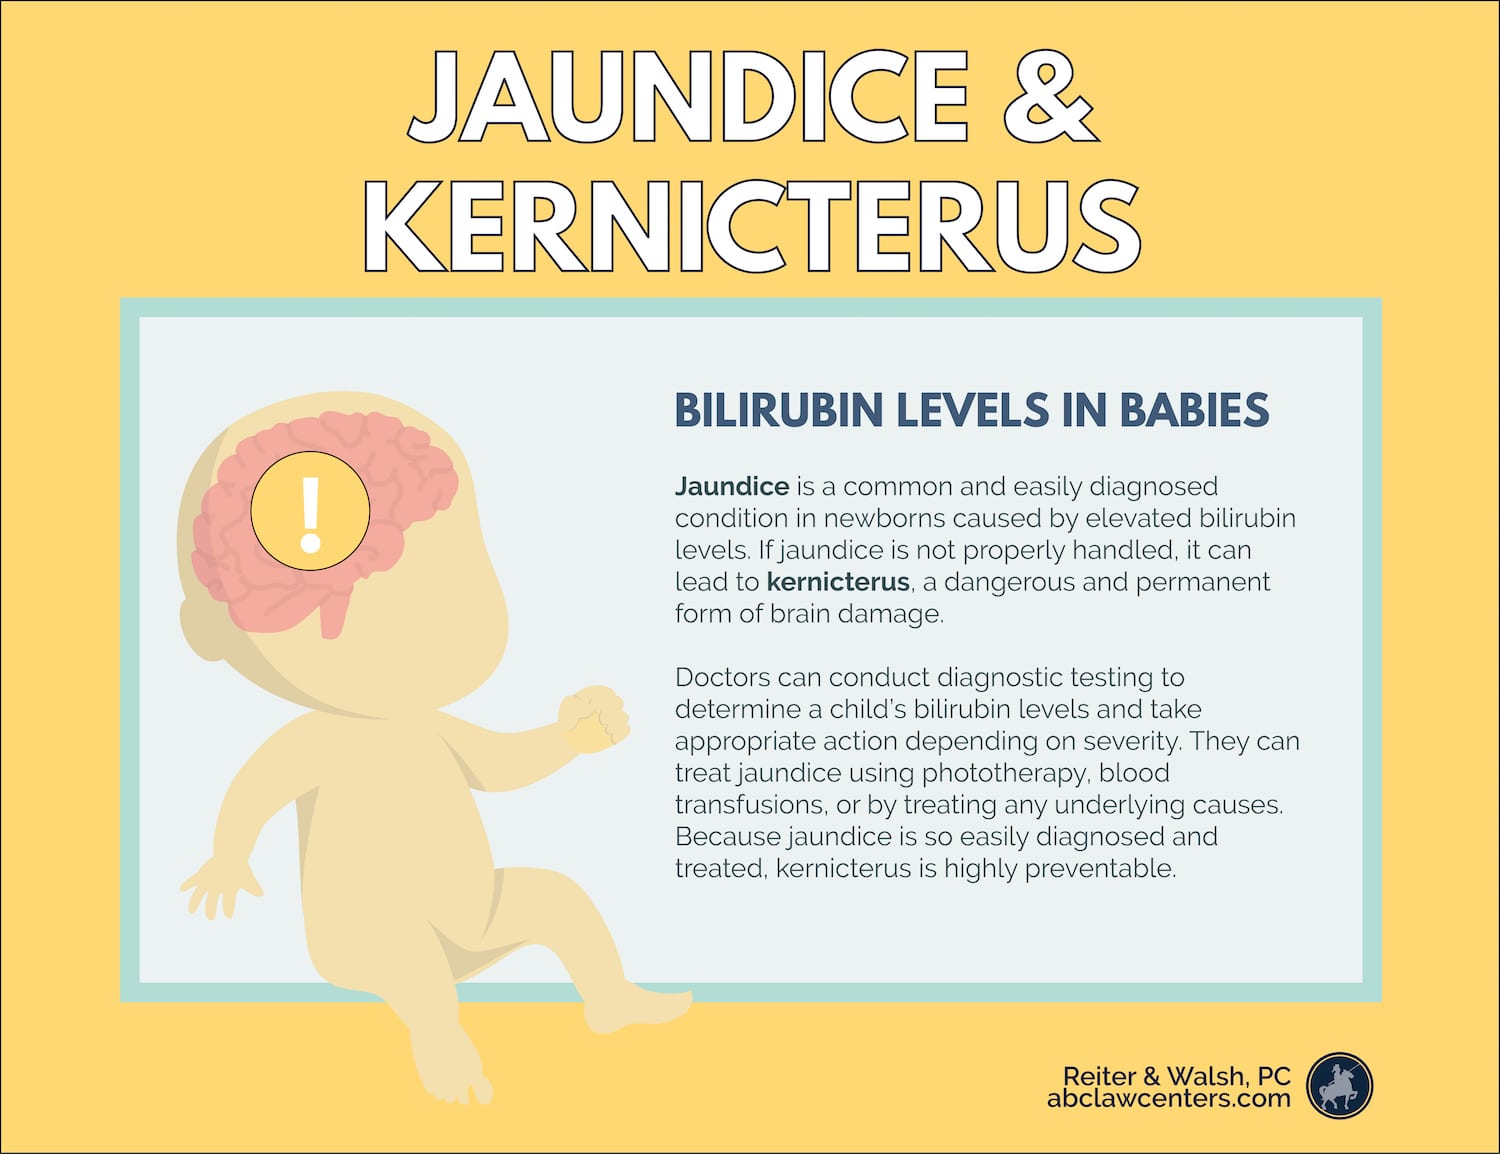 Jaundice and Kernicterus in Babies